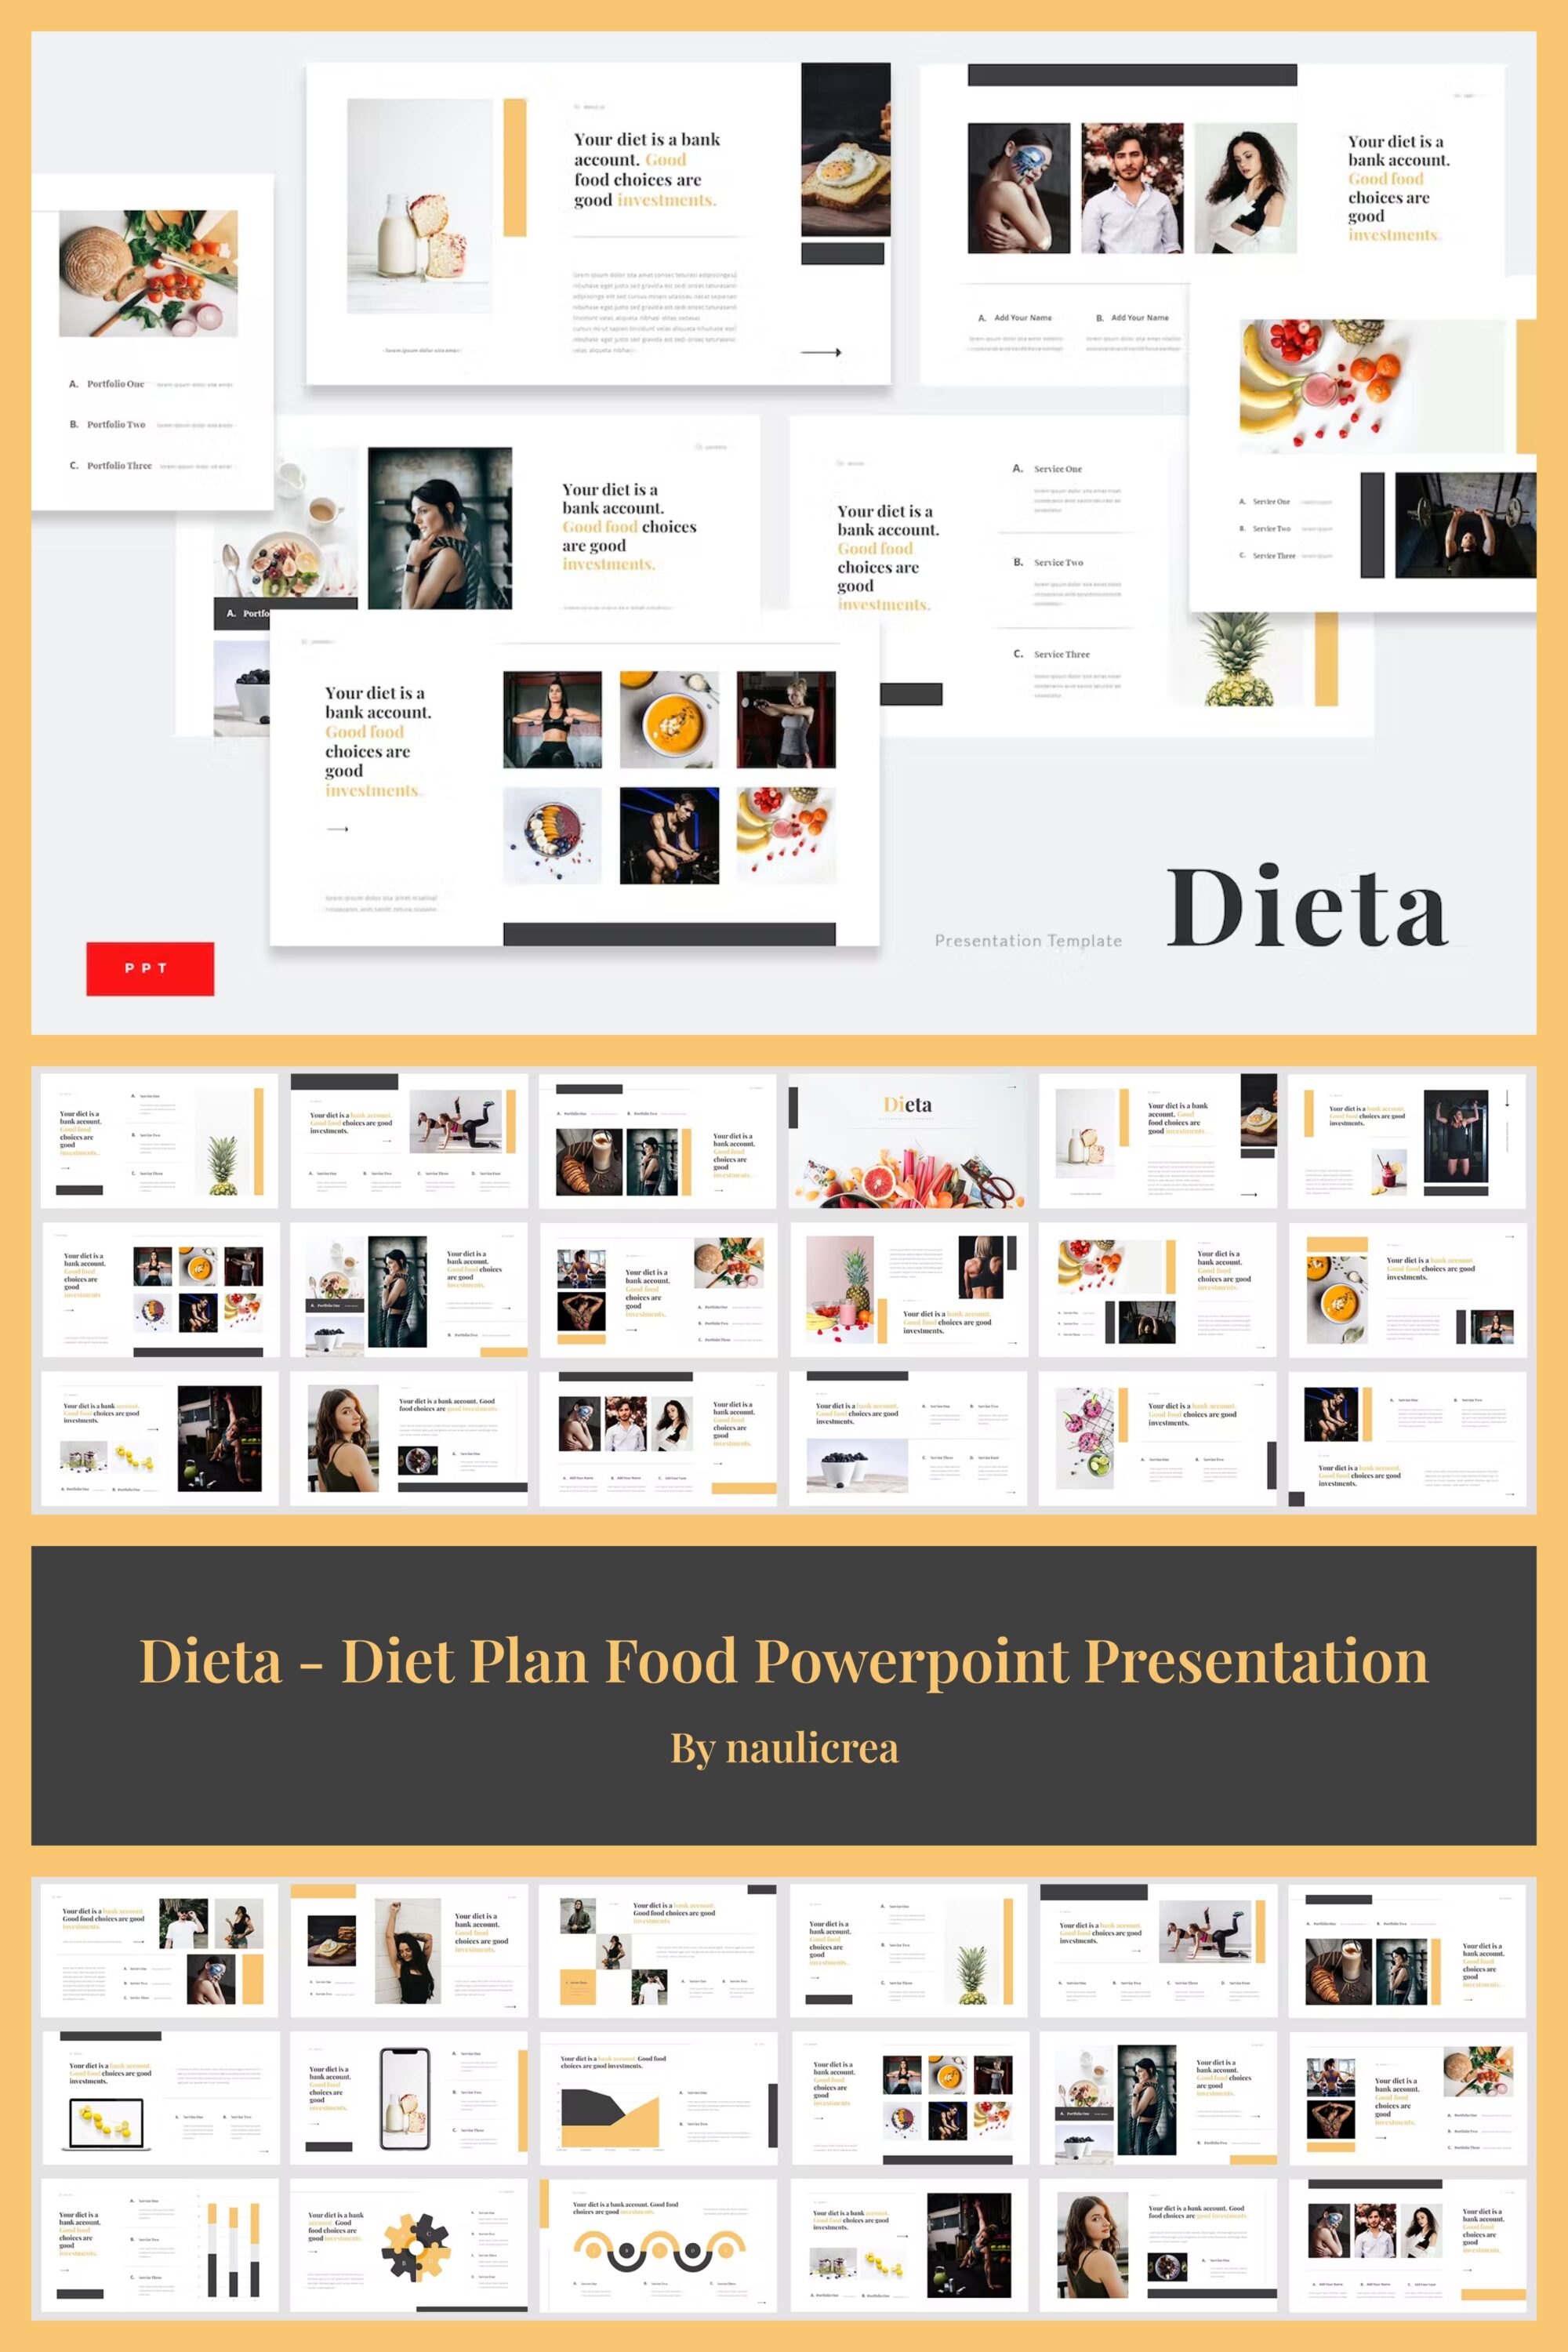 Dieta Diet Plan Food Powerpoint Presentation - pinterest image preview.